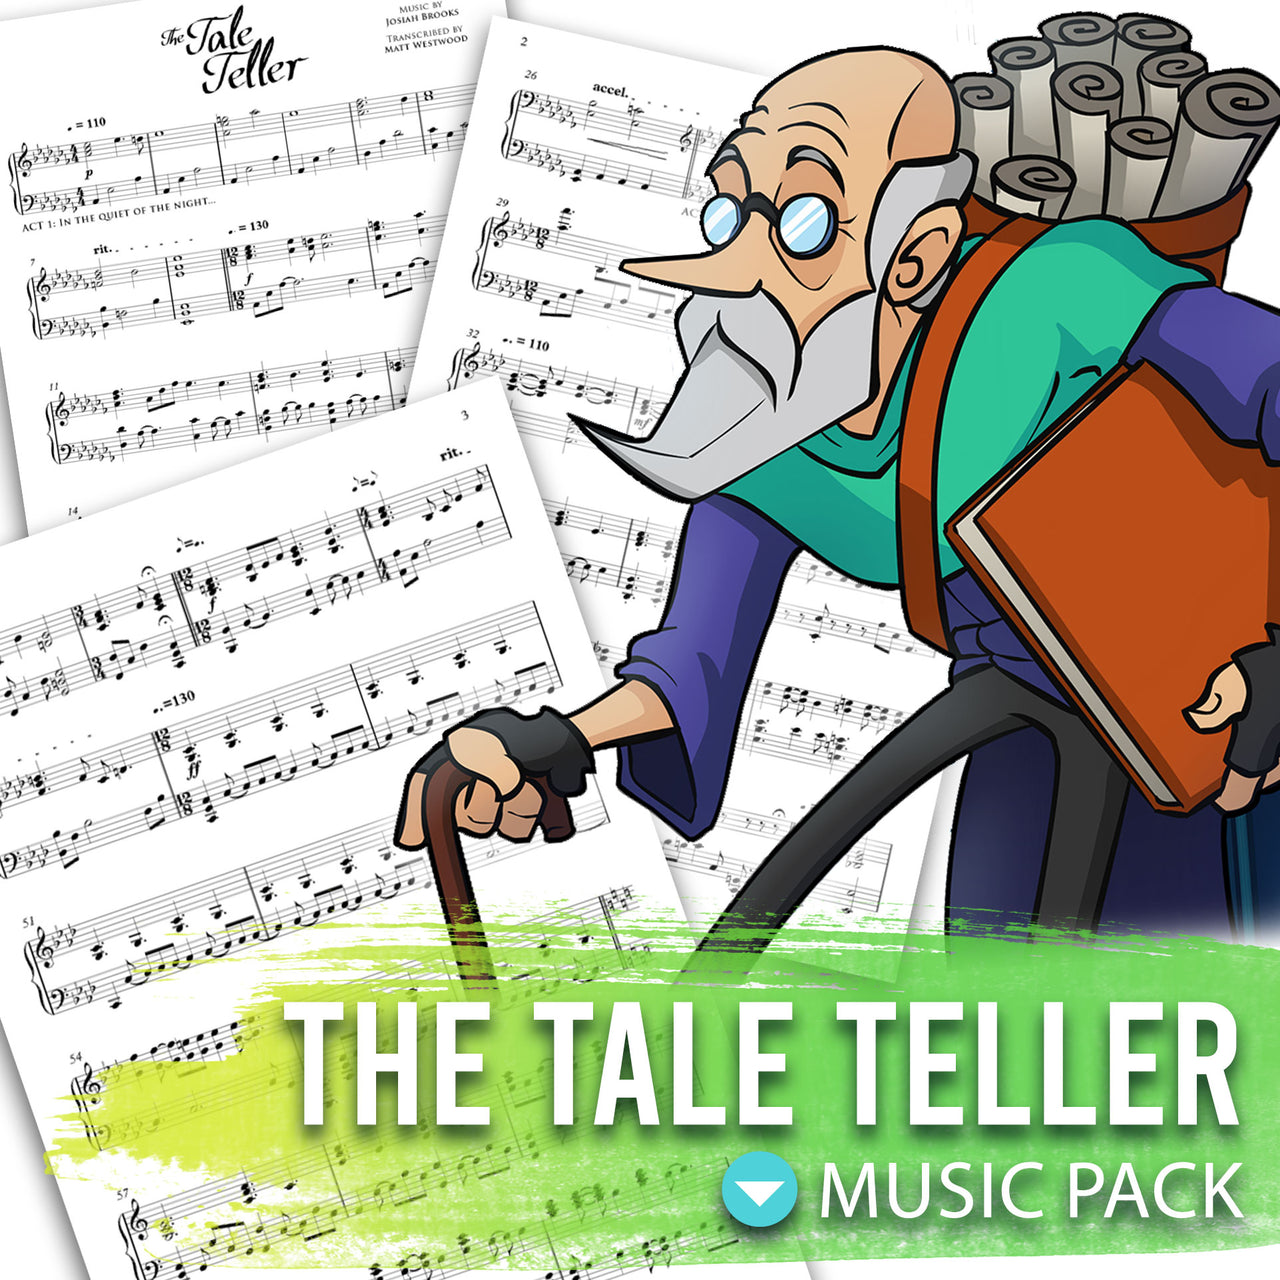 The Tale Teller Music Pack